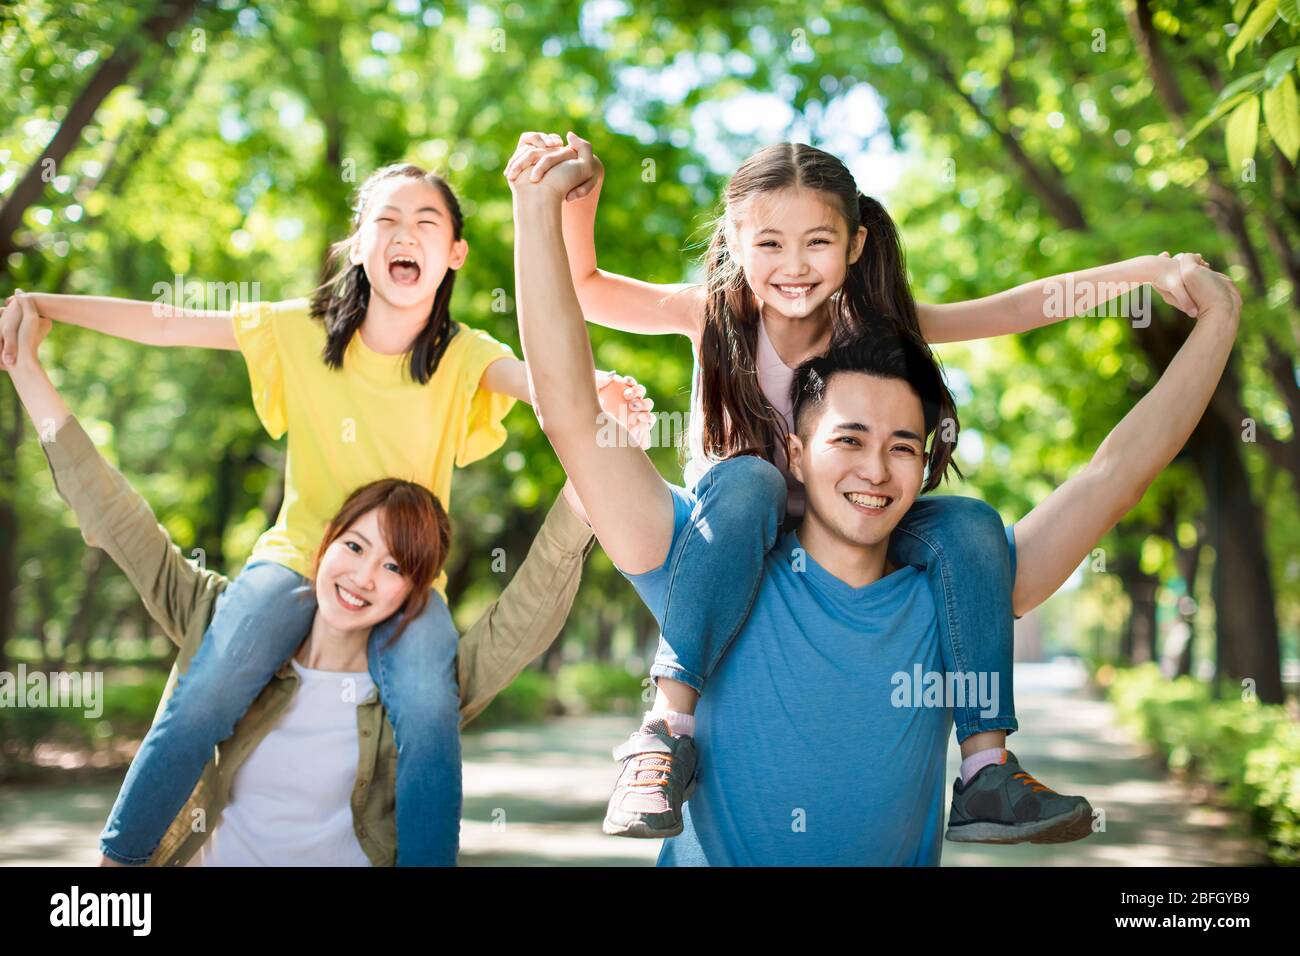 happy young family having fun outdoors Stock Photo